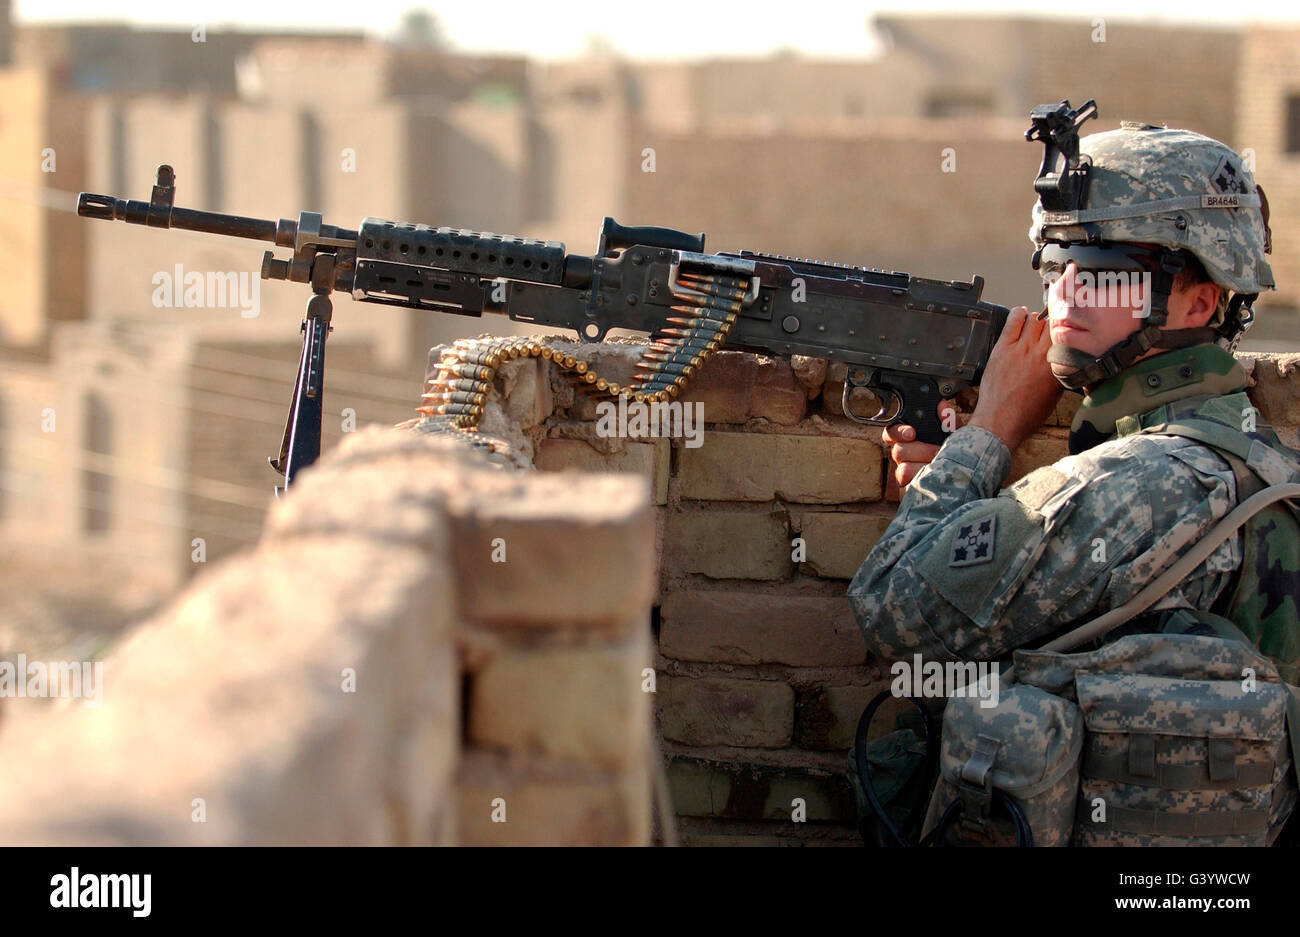 us-army-specialist-stands-security-watch-with-an-m-240b-machine-gun-G3YWCW.jpg